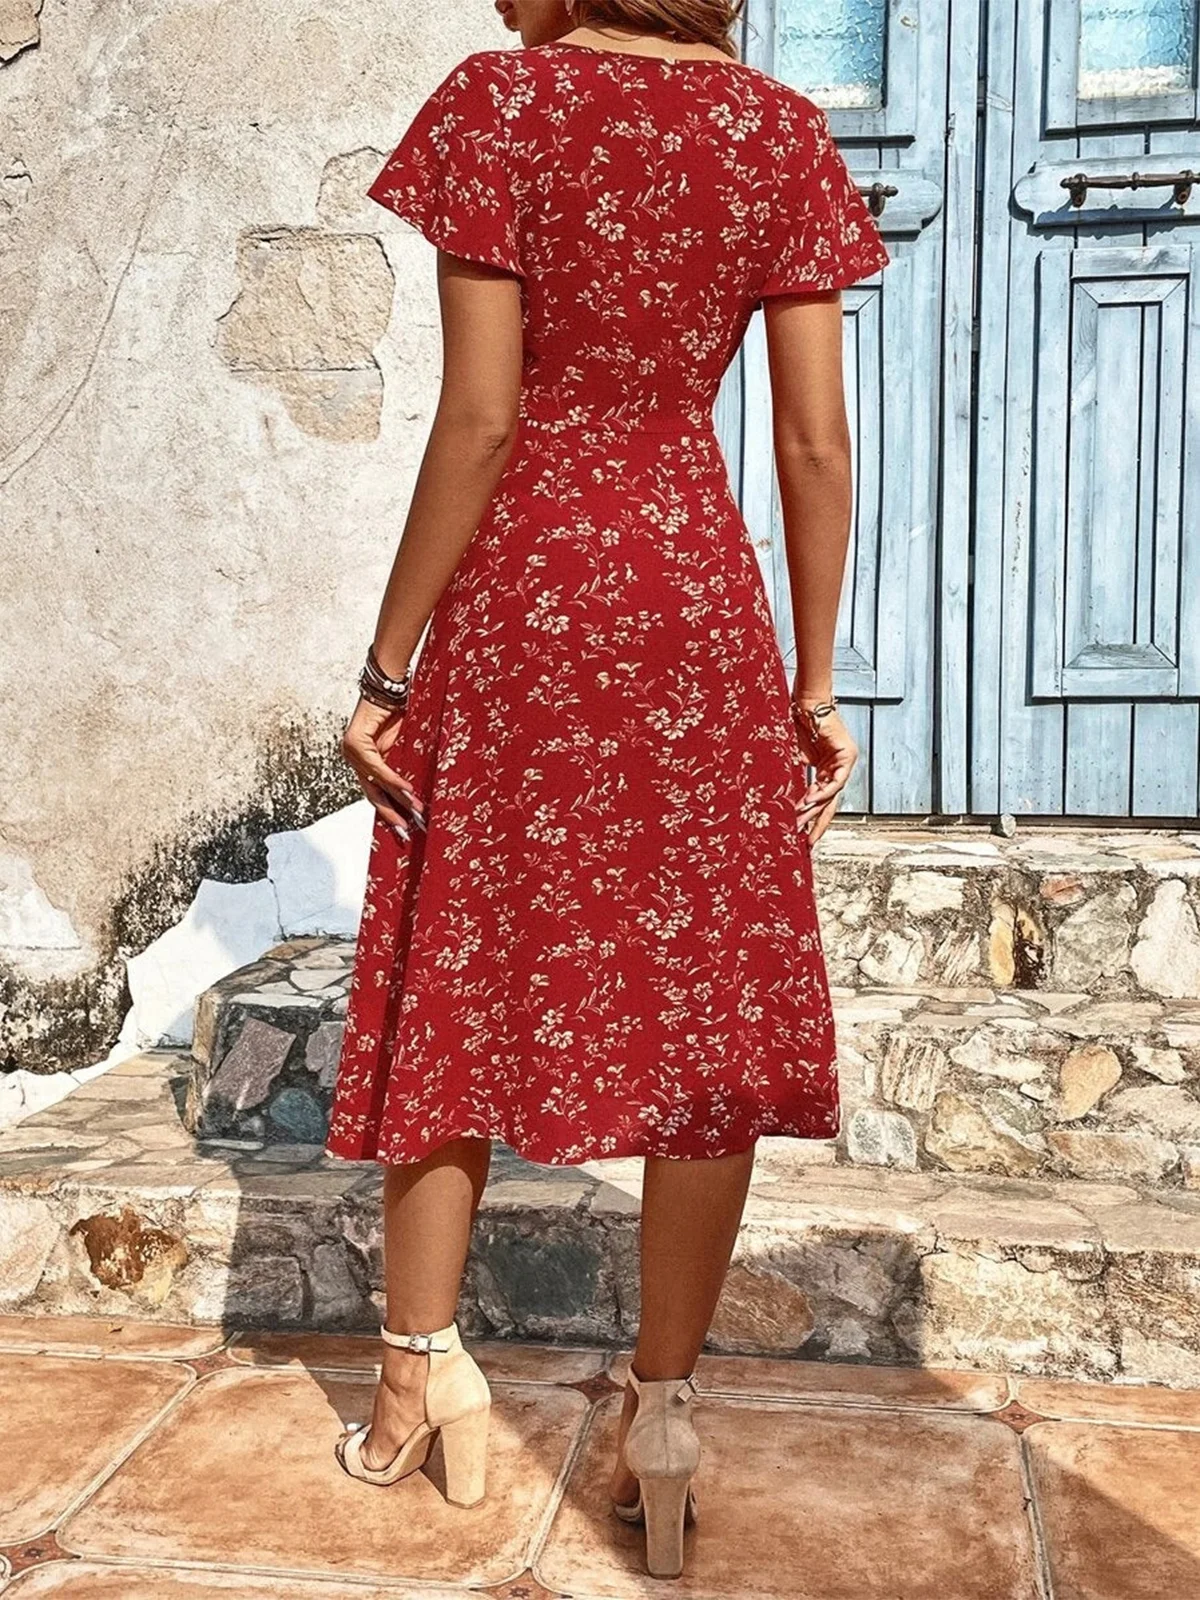 Elegant Regelmäßige Passform Rüschenärmel Geblümt Karree-Ausschnitt Kleid